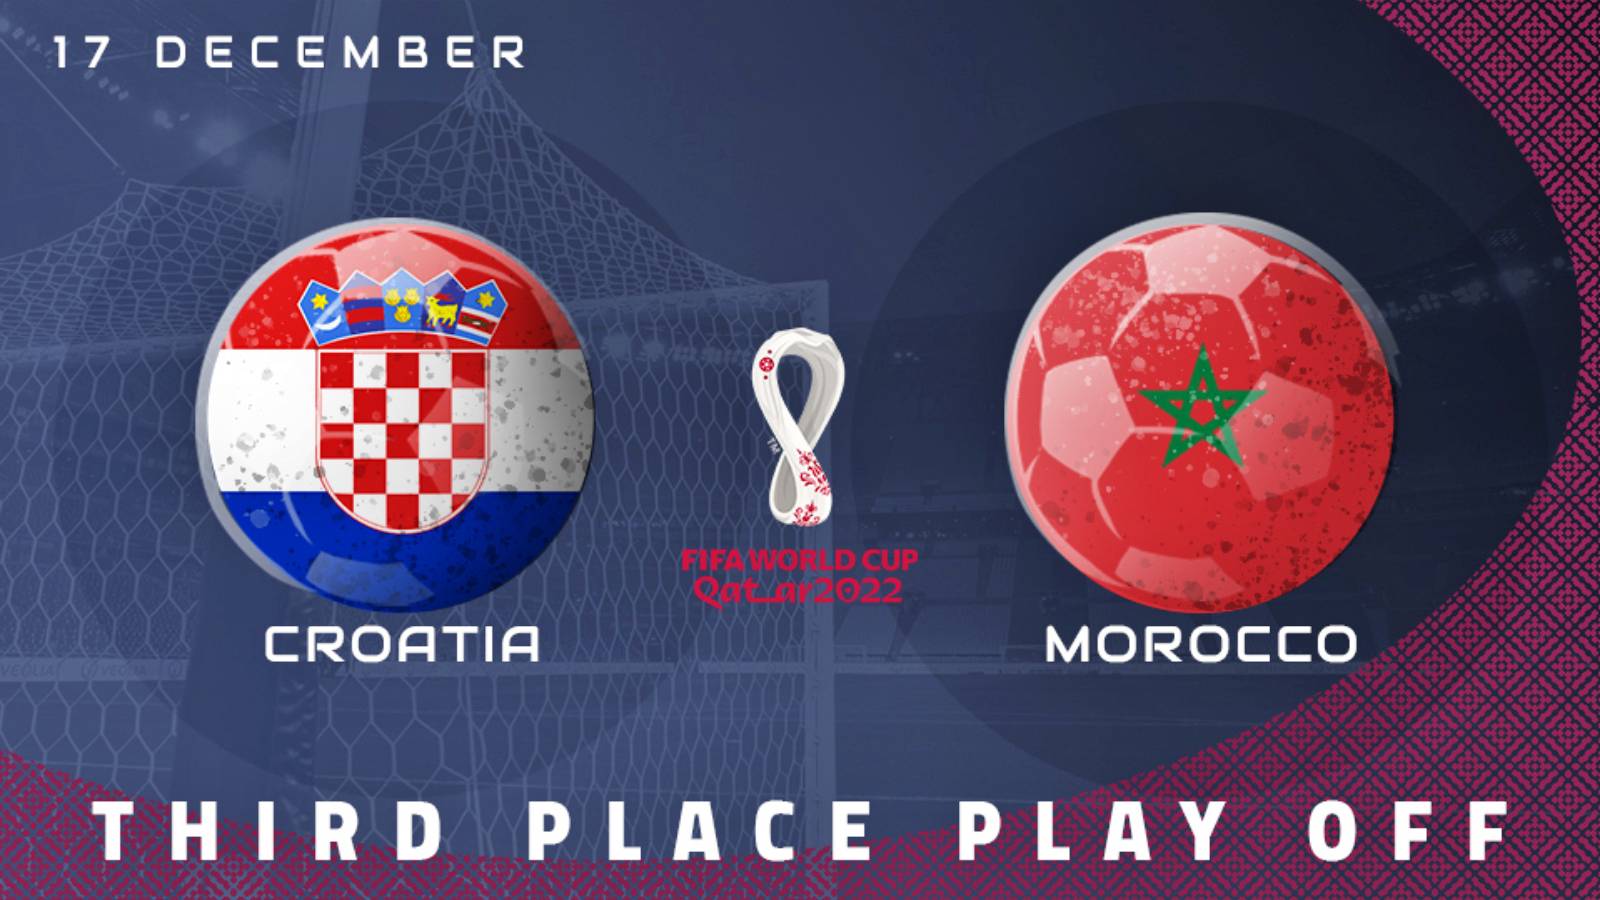 KROATIEN - MAROCKO LIVE TVR 1 VM 2022 QATAR